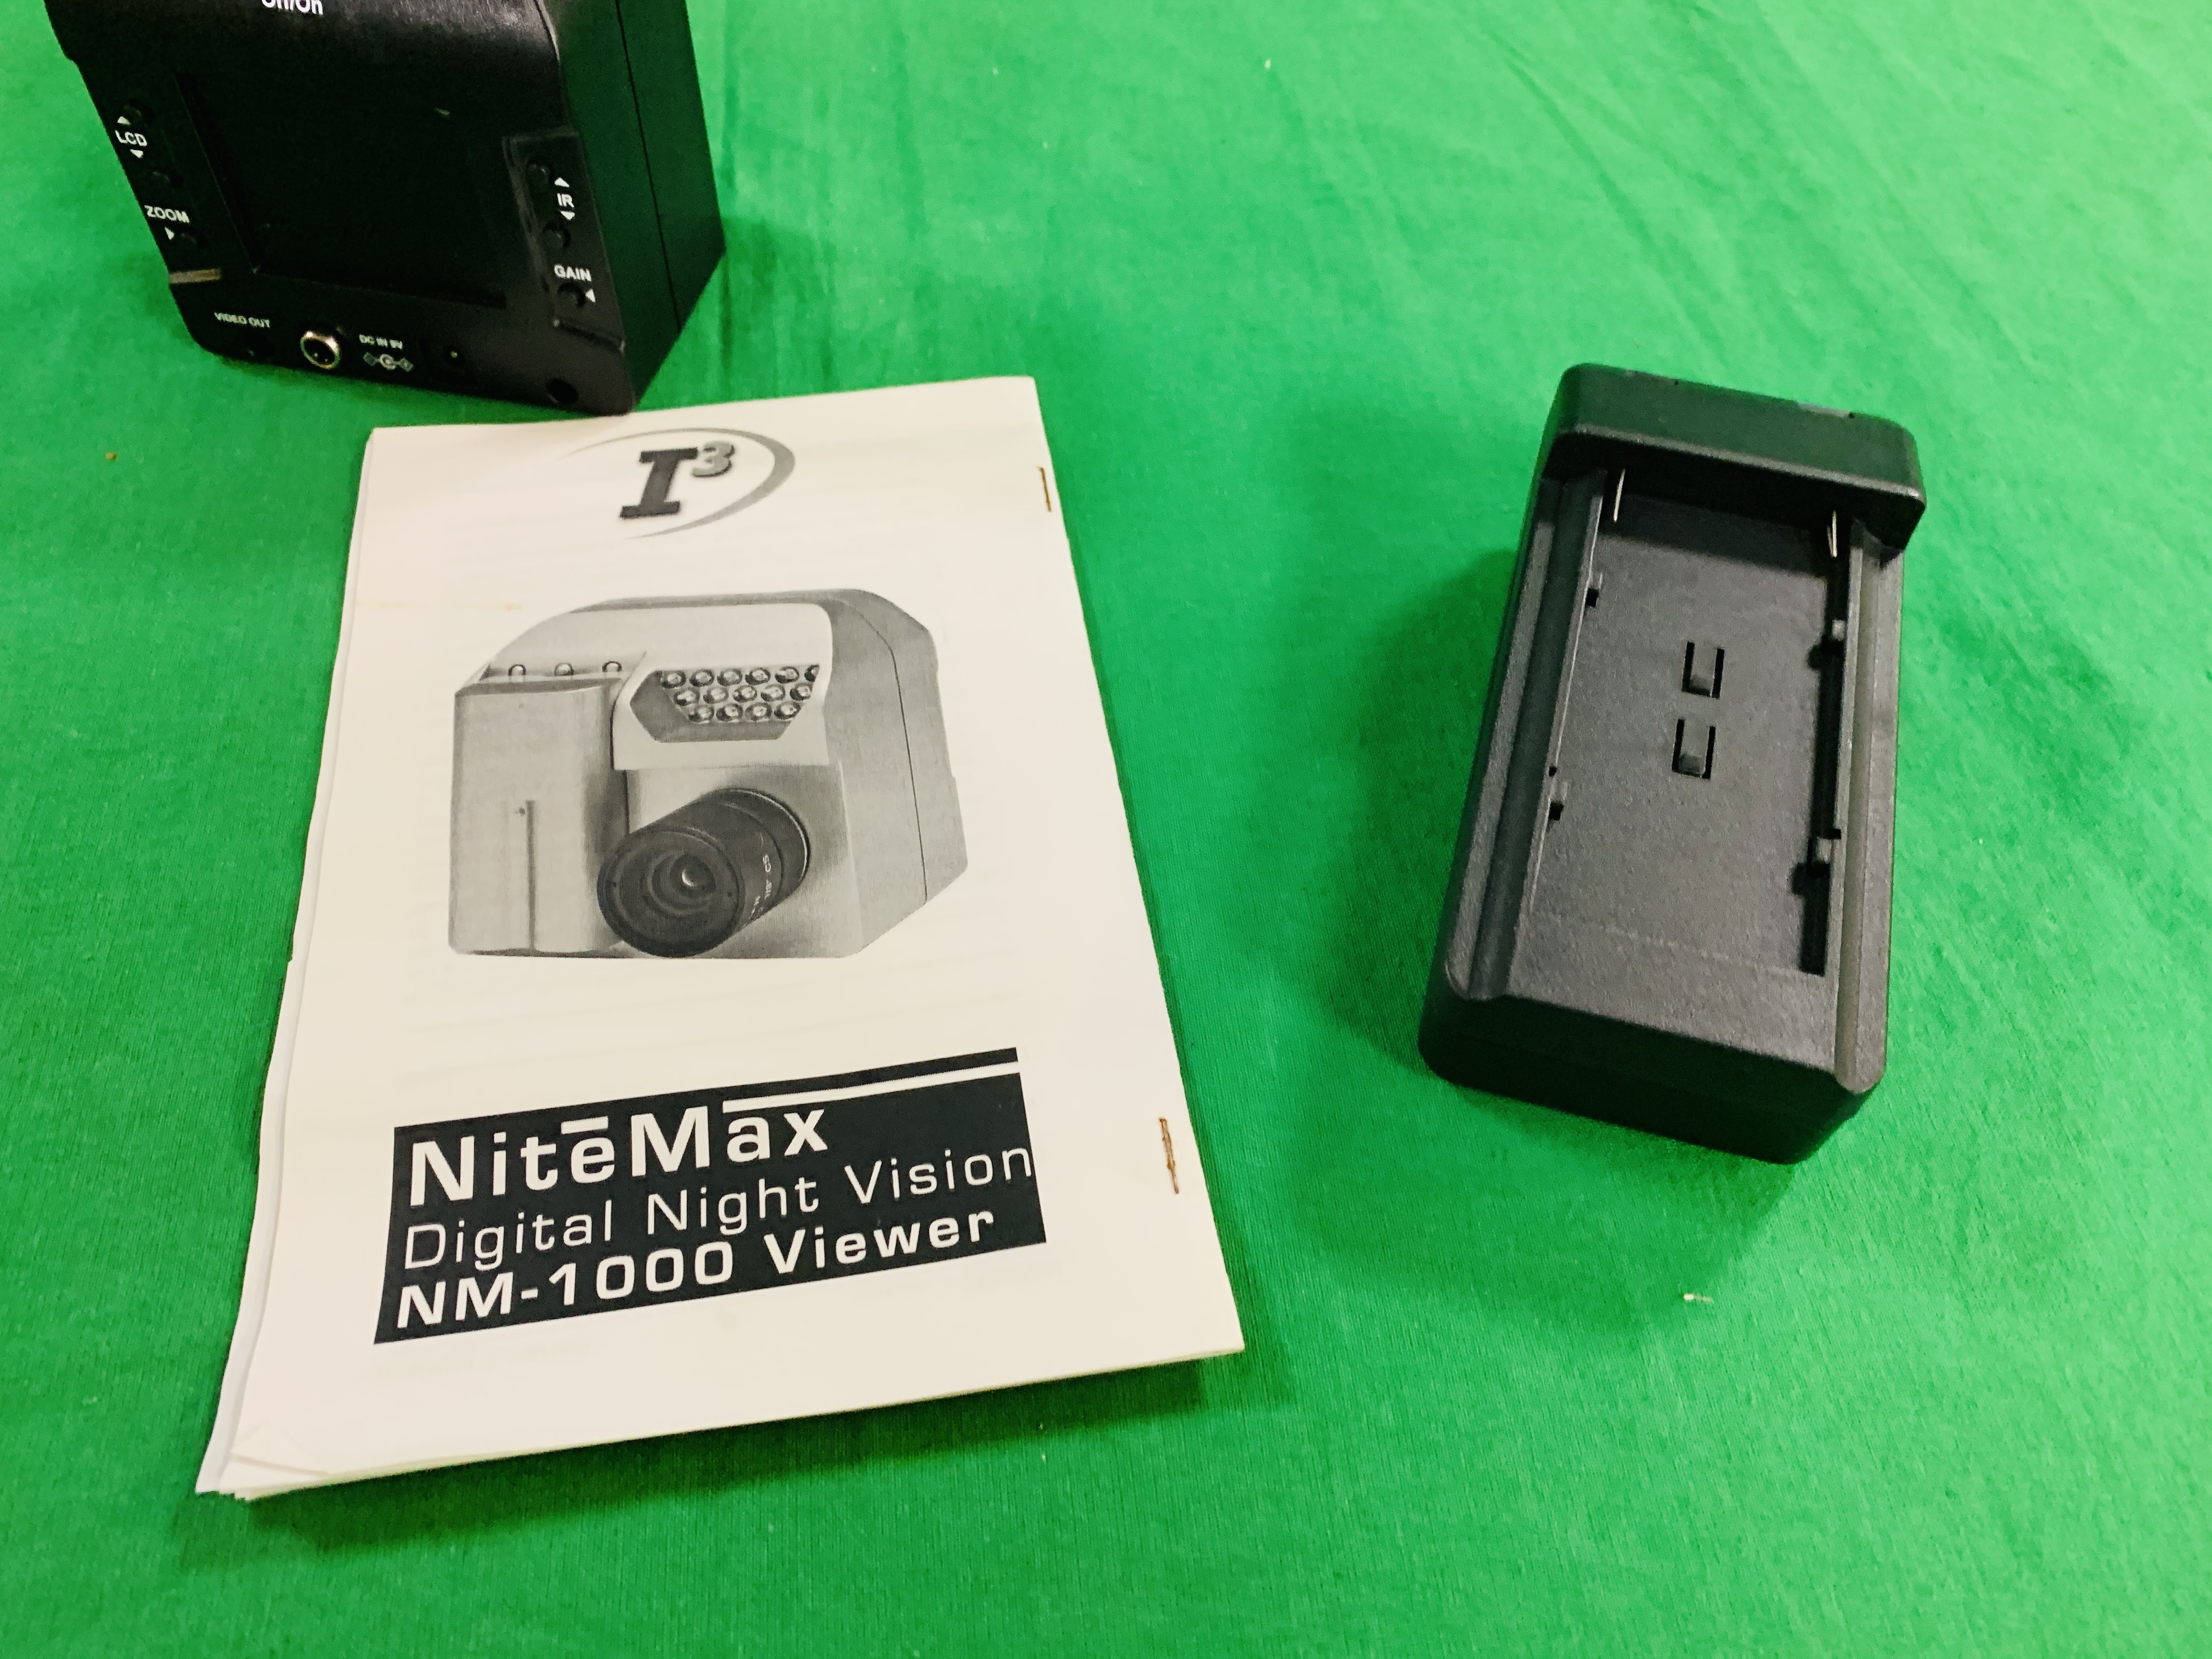 A BOXED NITEMAX DIGITAL NIGHT VISION VIEWER - I3 DIGITAL TECHNOLOGY - Image 6 of 6